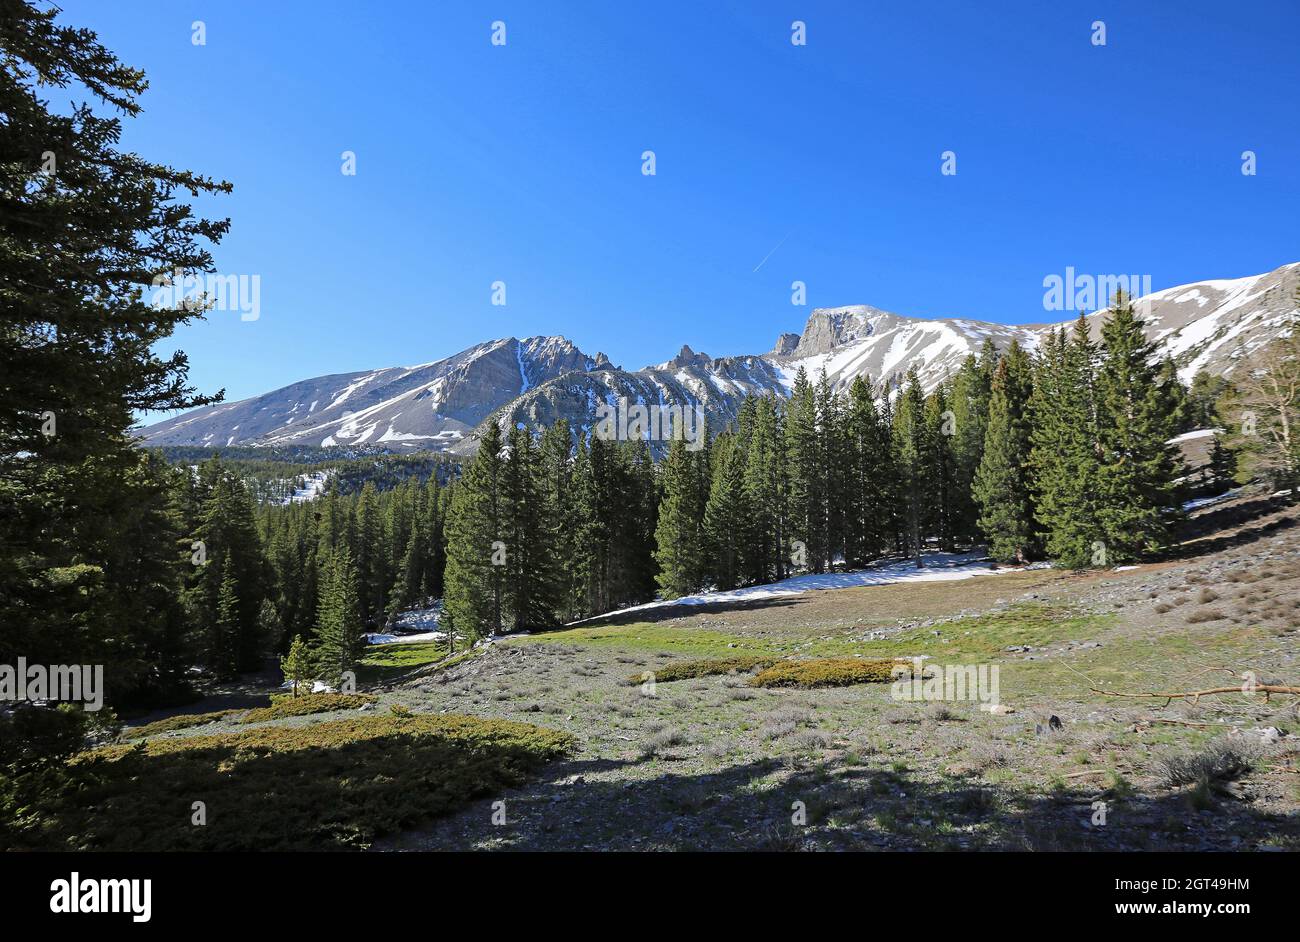 Idyll in Great Basin National Park, Nevada Stock Photo